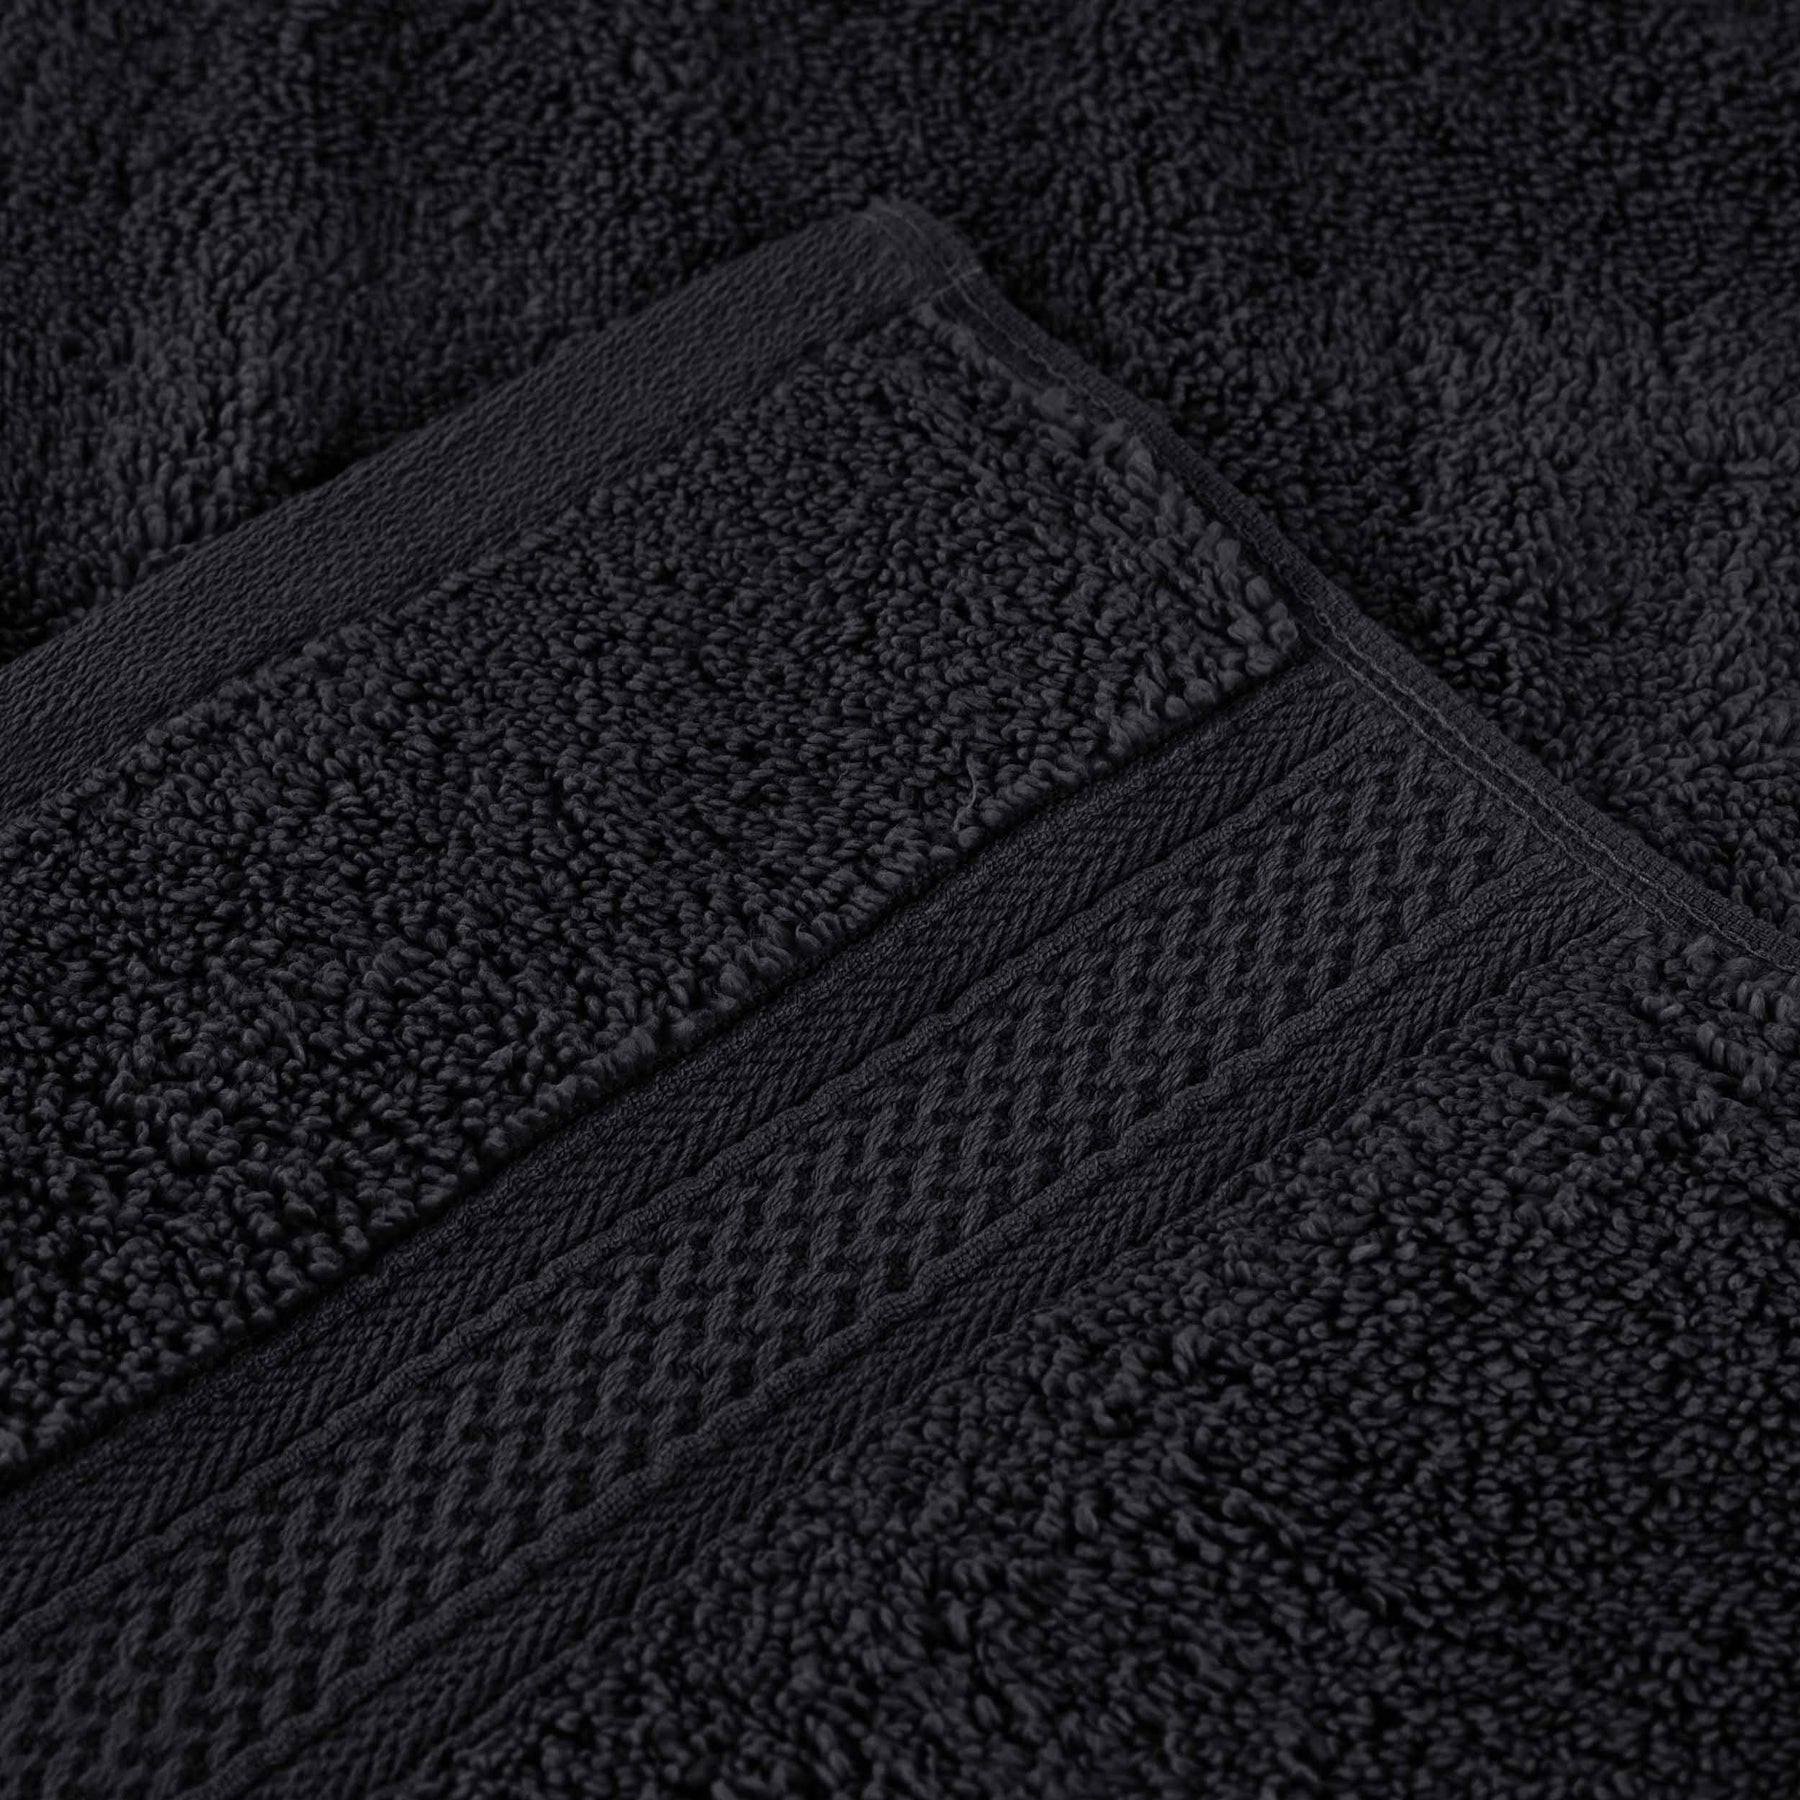 Cotton Highly Absorbent 6-Piece Jacquard Chevron Towel Set - Black